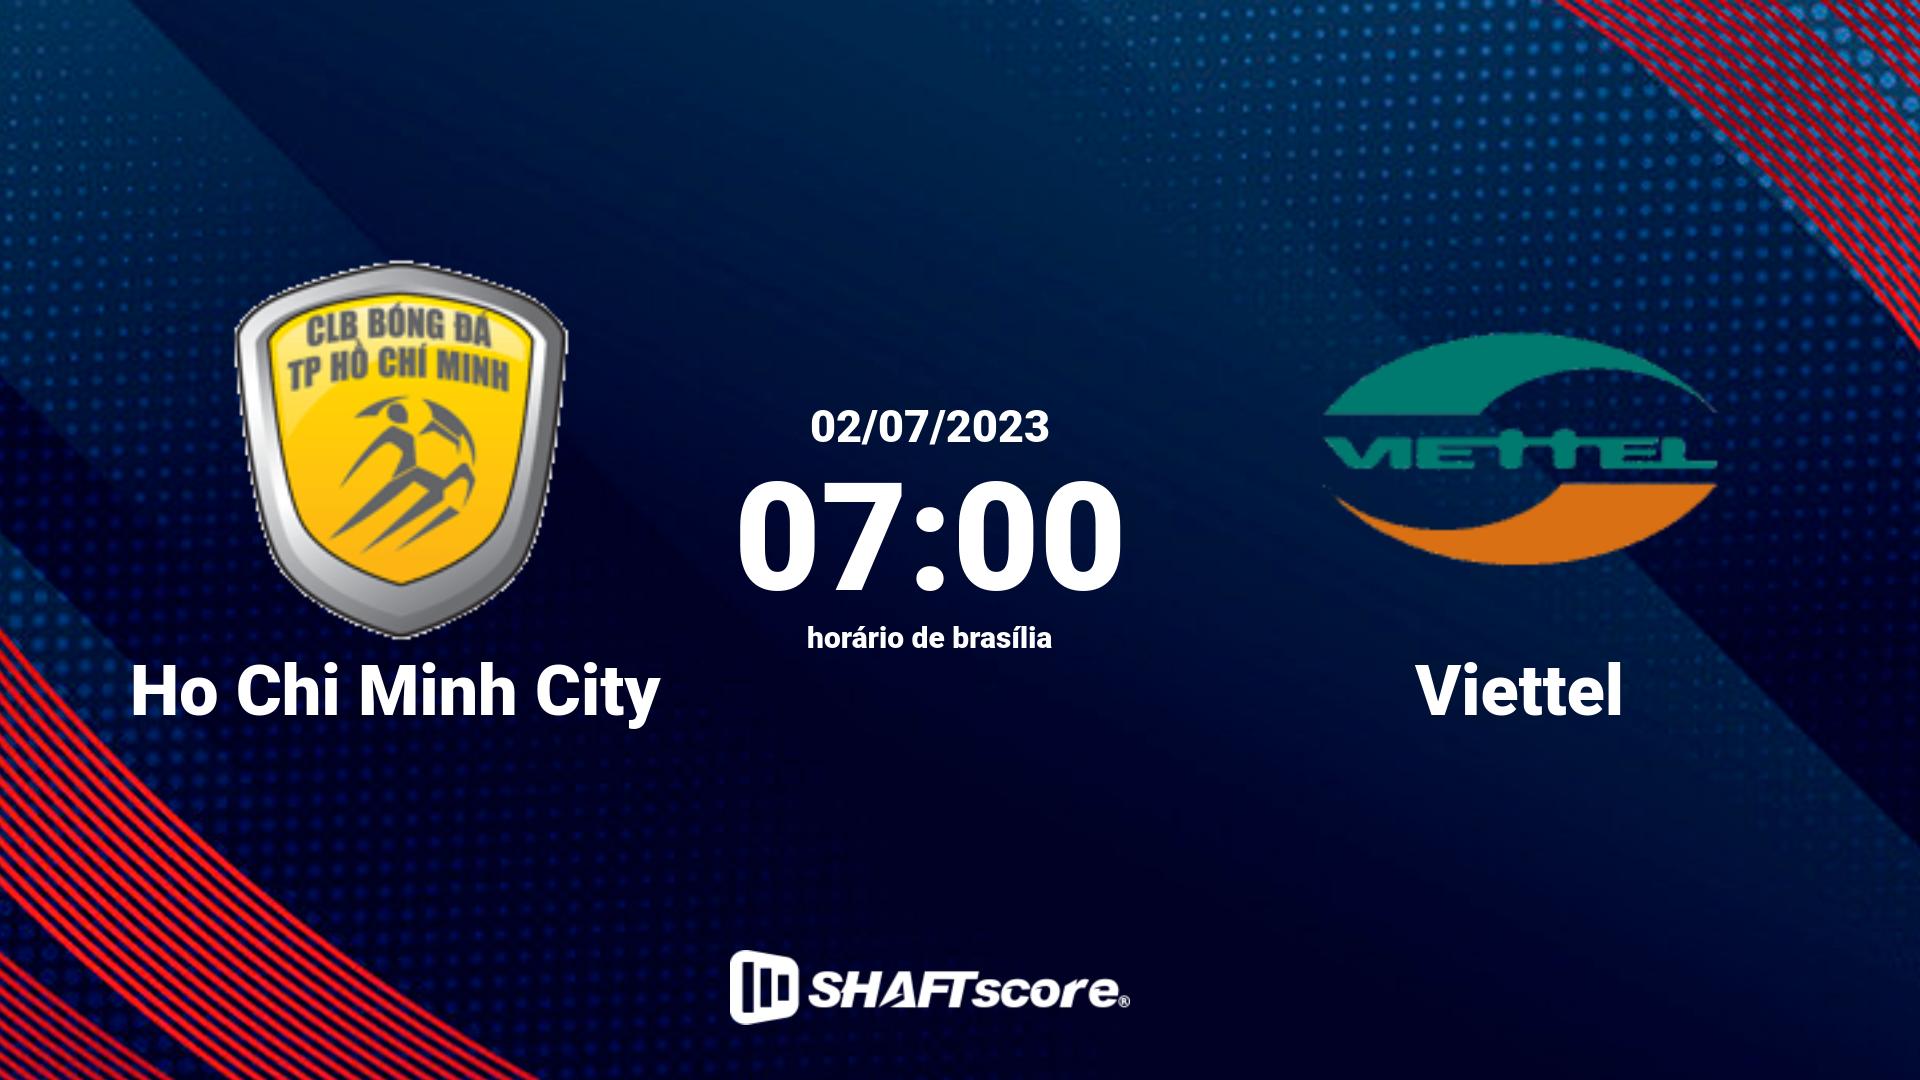 Estatísticas do jogo Ho Chi Minh City vs Viettel 02.07 07:00